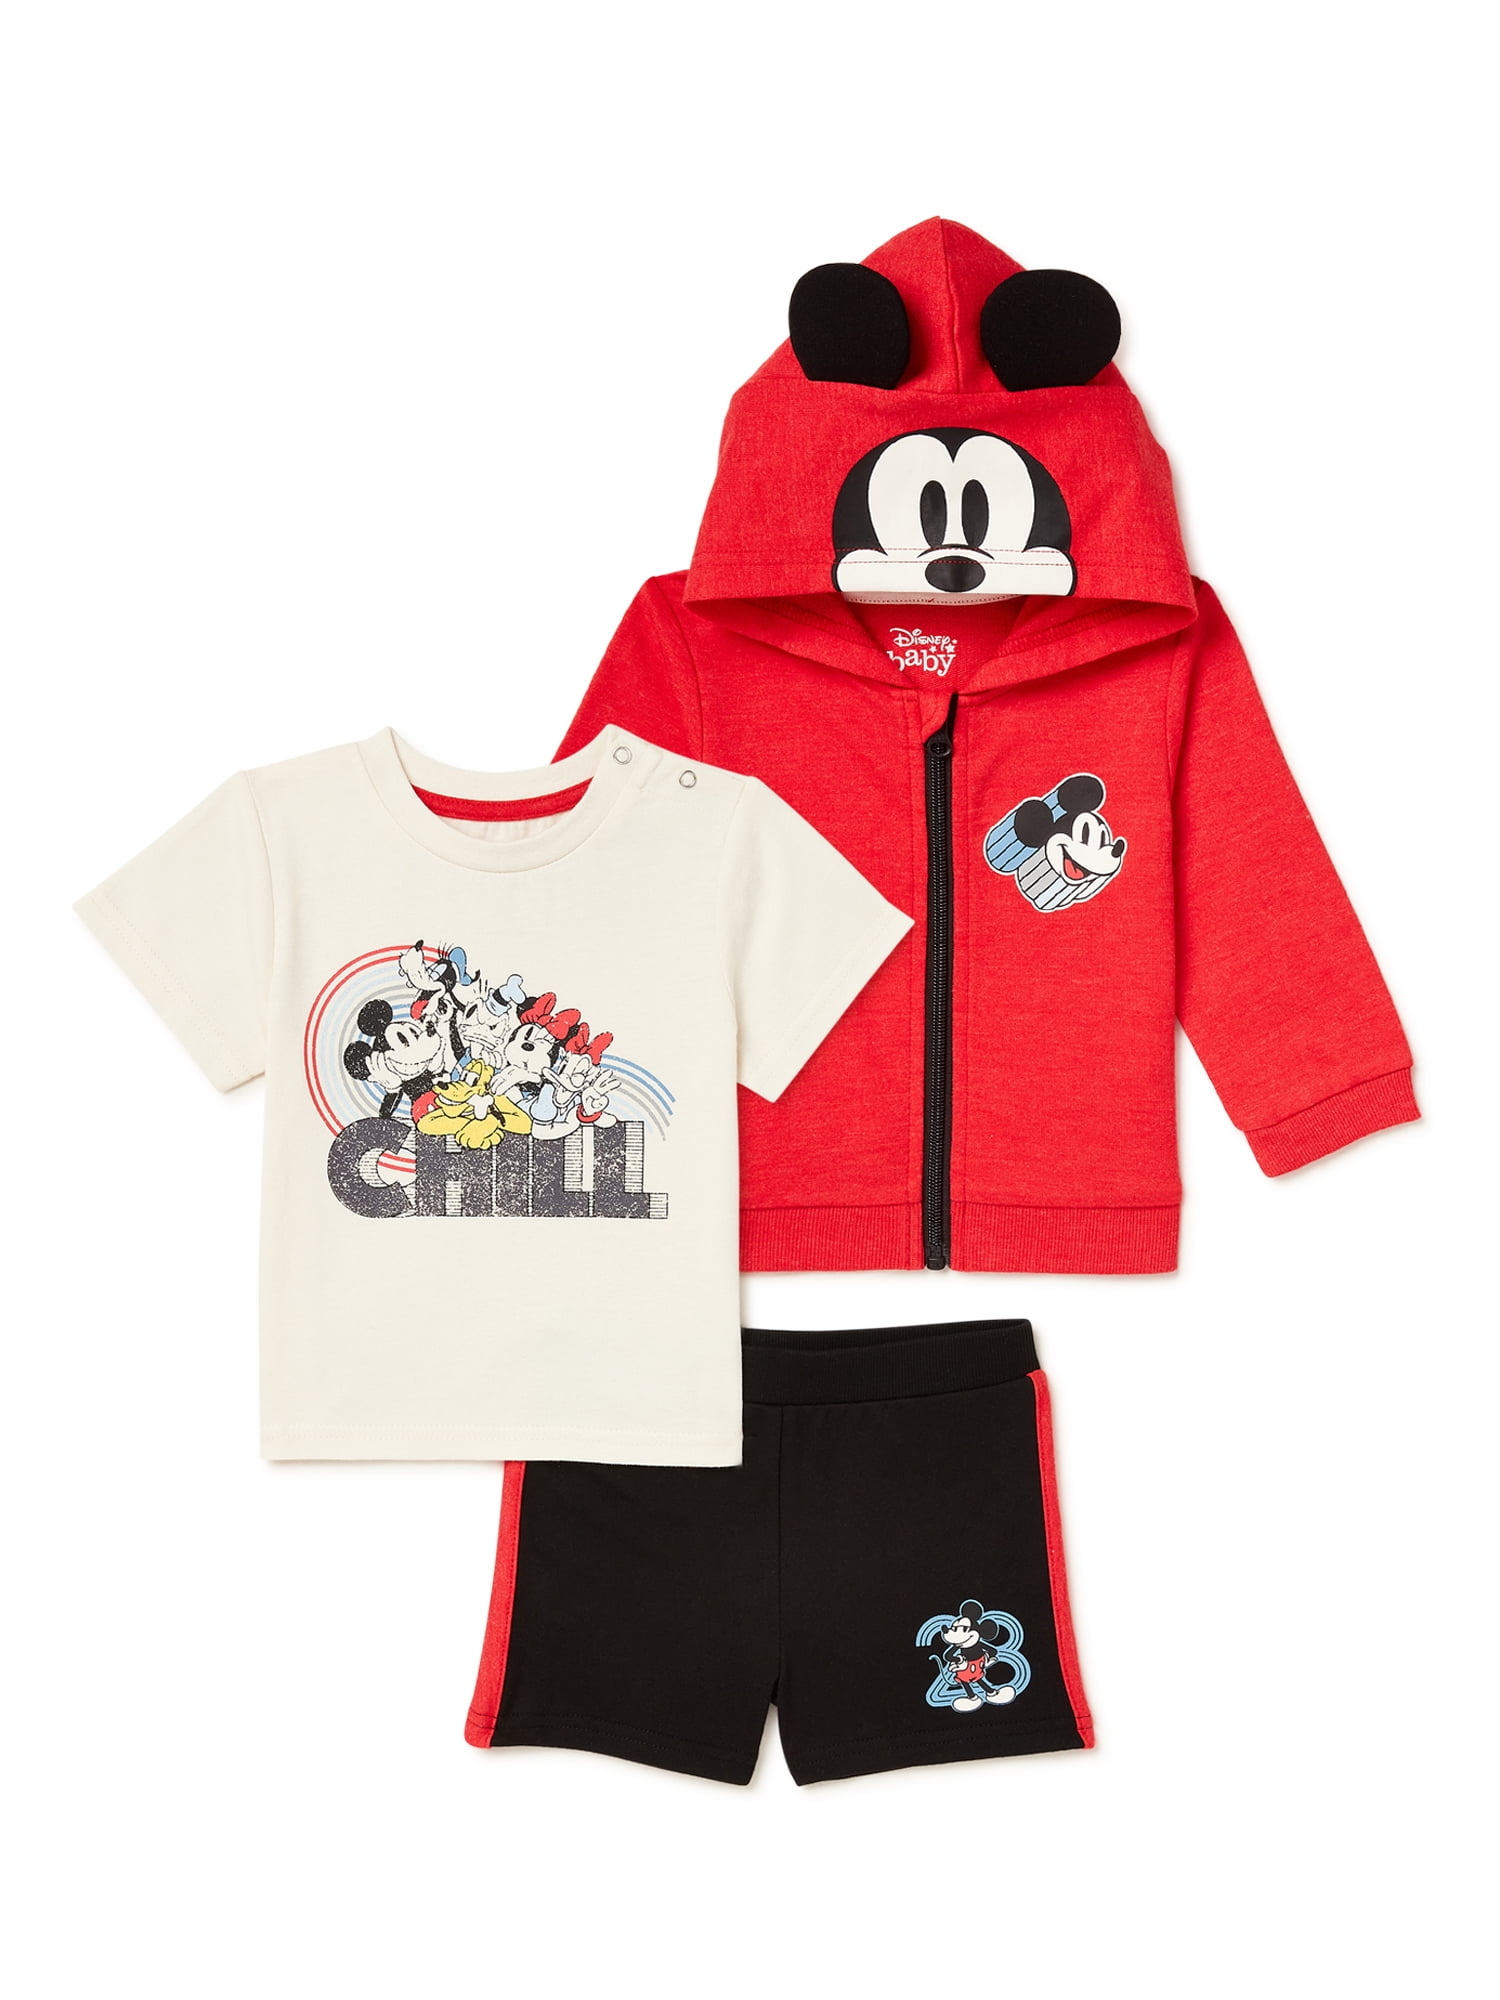 Gap Disney Clothing Boys Clothing Jackets & Coats Mickey Mouse baby coat size 6-12 months 